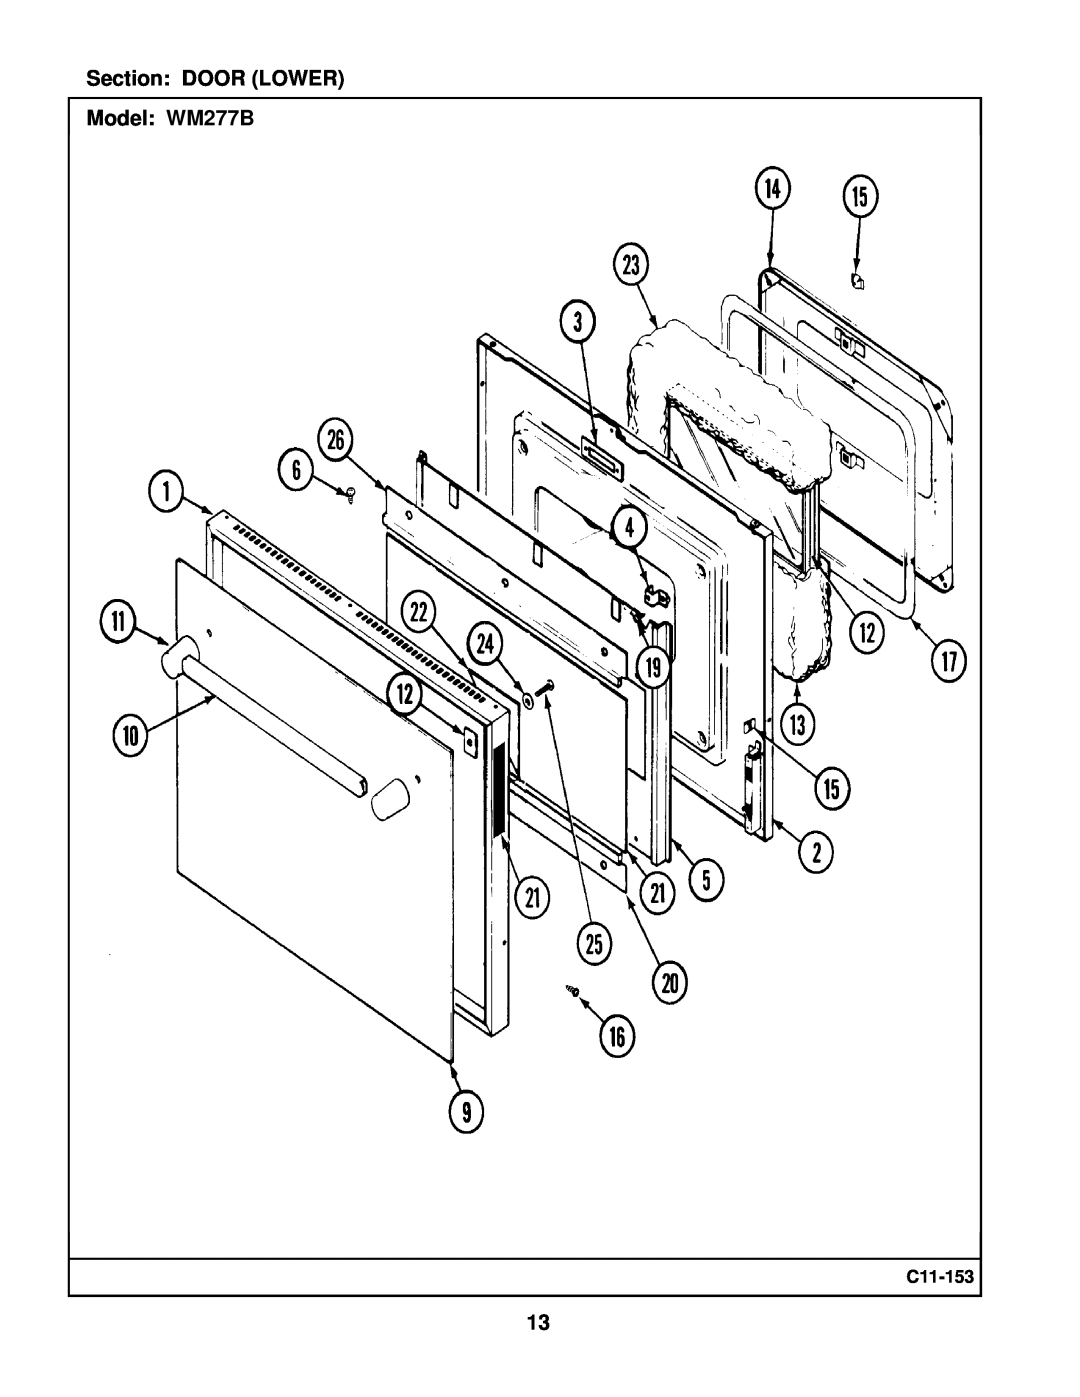 Maytag manual Section DOOR LOWER Model WM277B, C11-153 